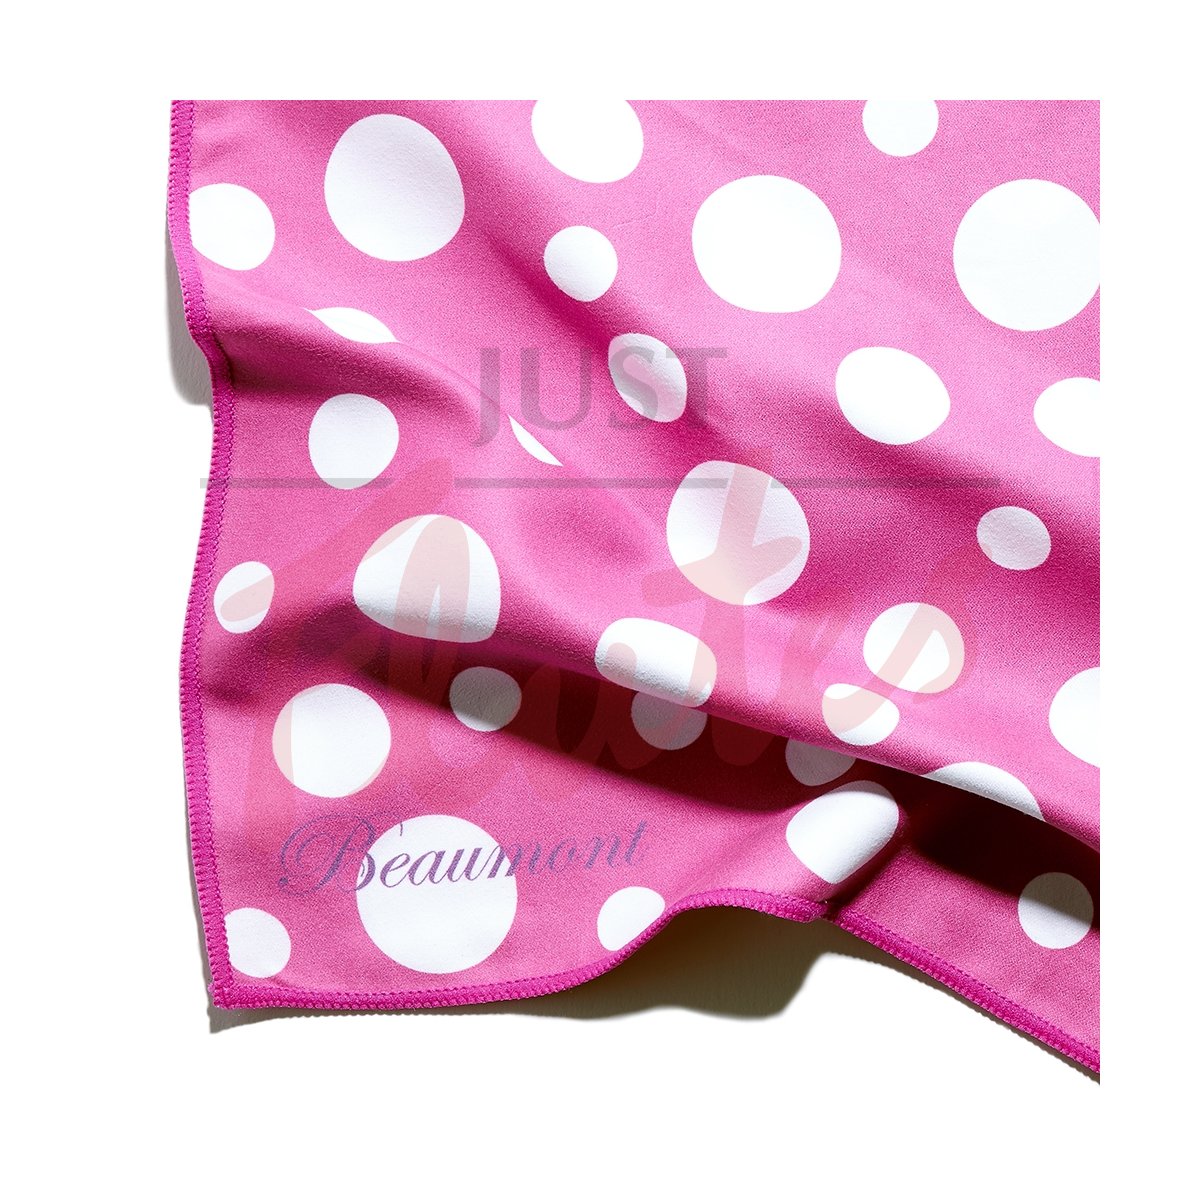 Beaumont Large Microfibre Polishing Cloth, Pink Polka Dot